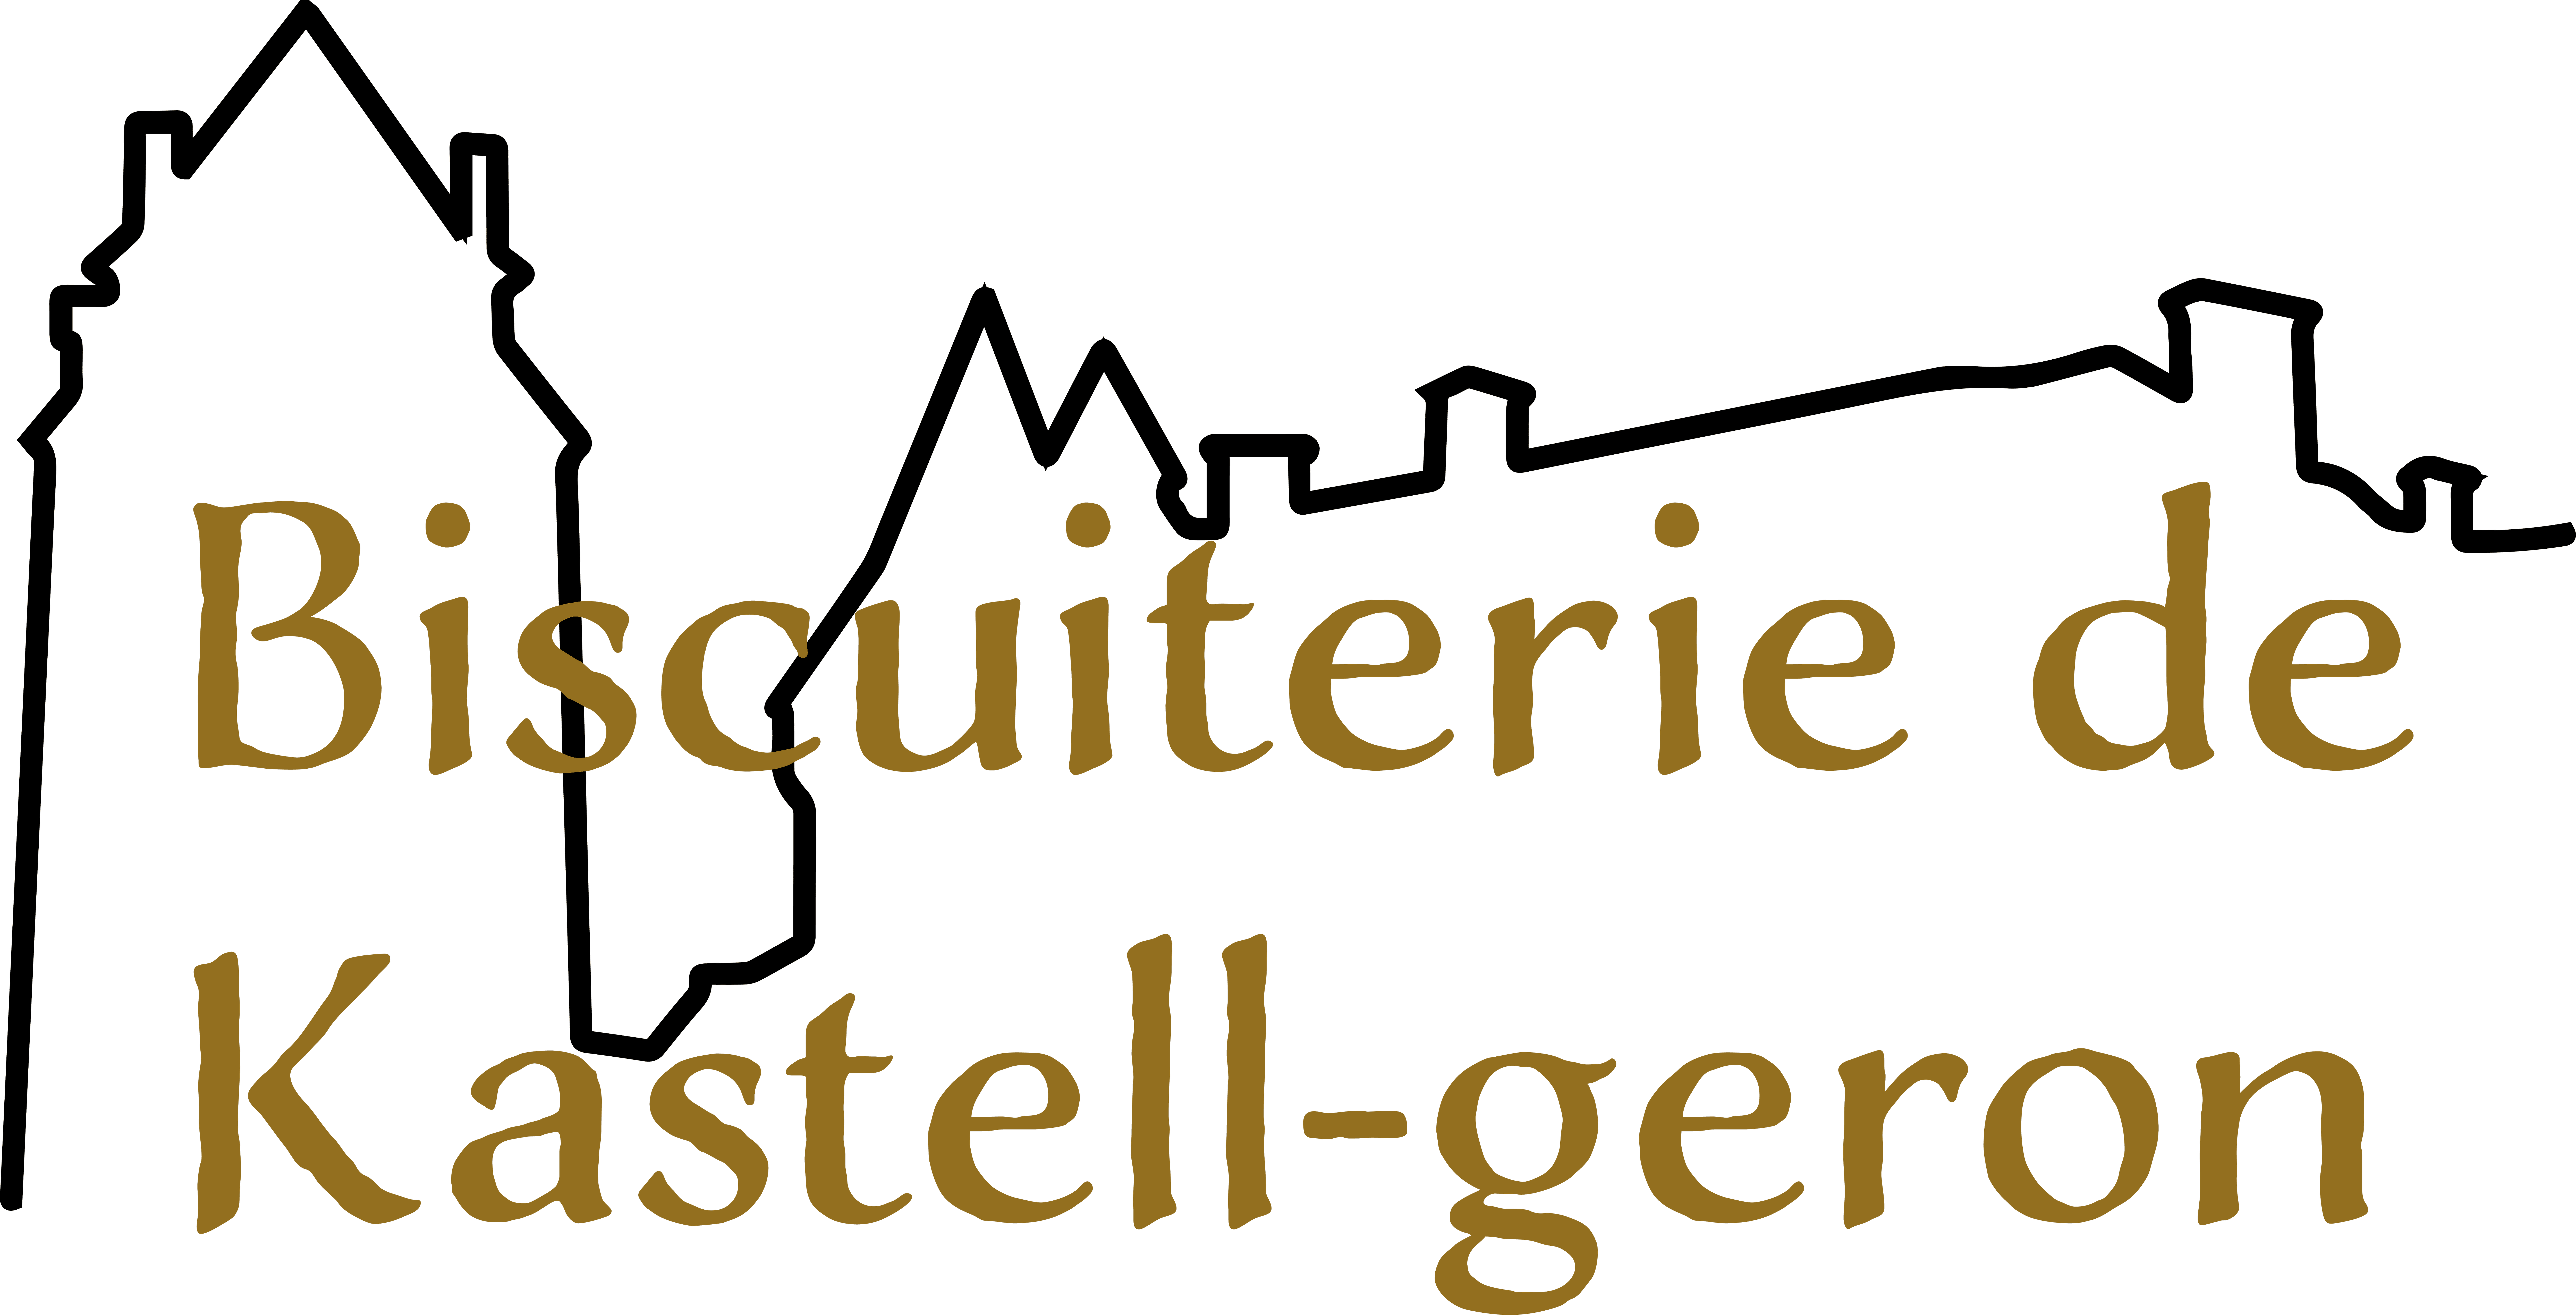 Biscuiterie artisanale bretonne de Kastell Geron